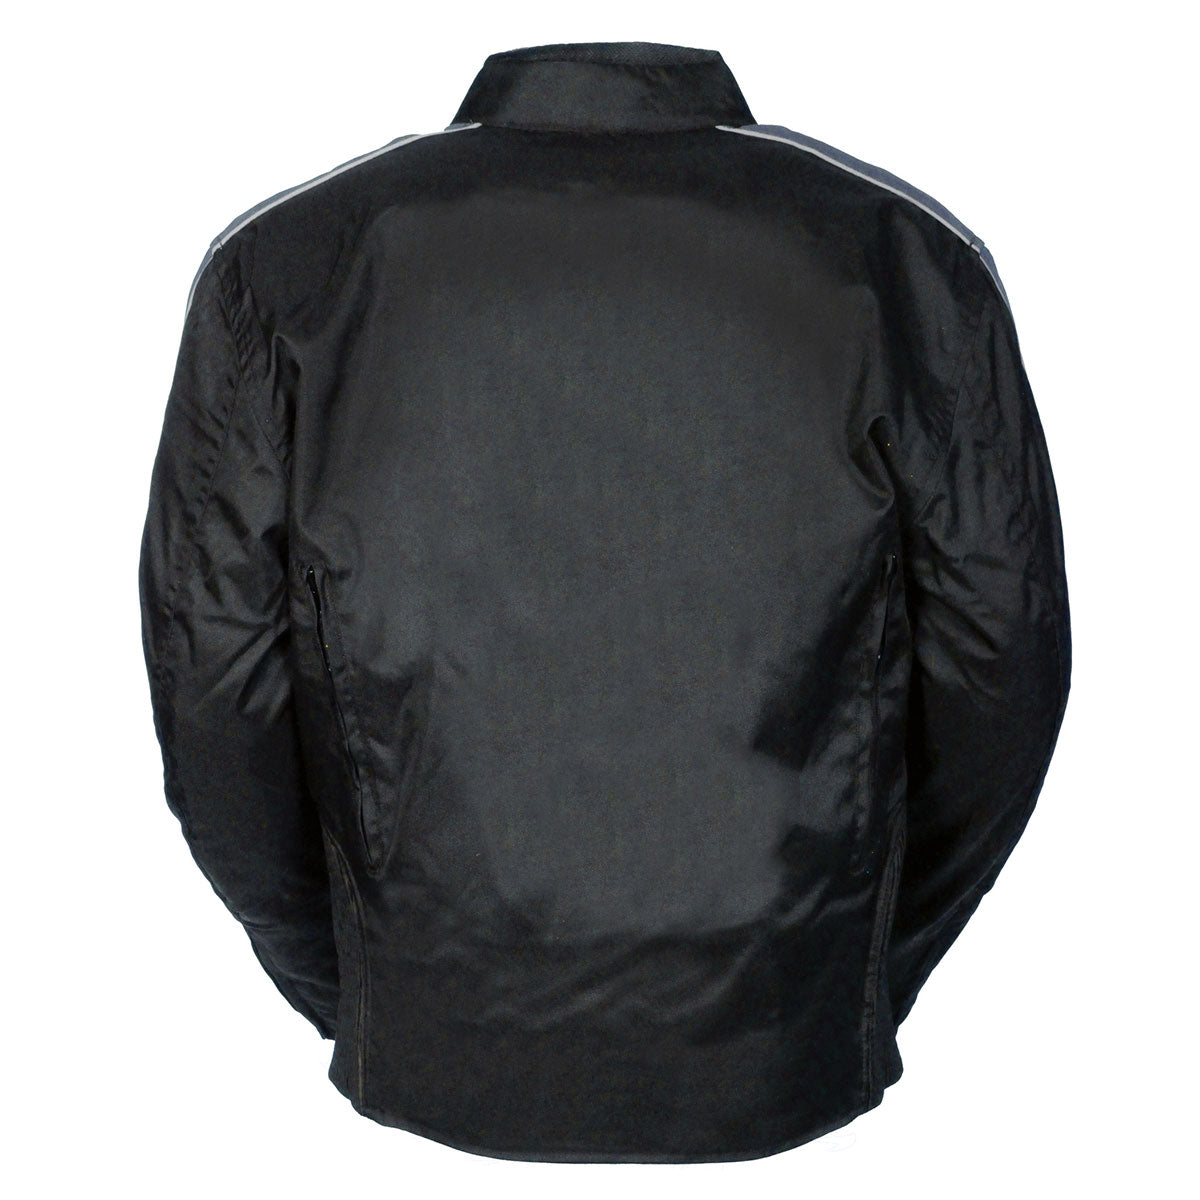 NexGen SH0030 Men's 'Racer' Black and Grey Textile Motorcycle Jacket